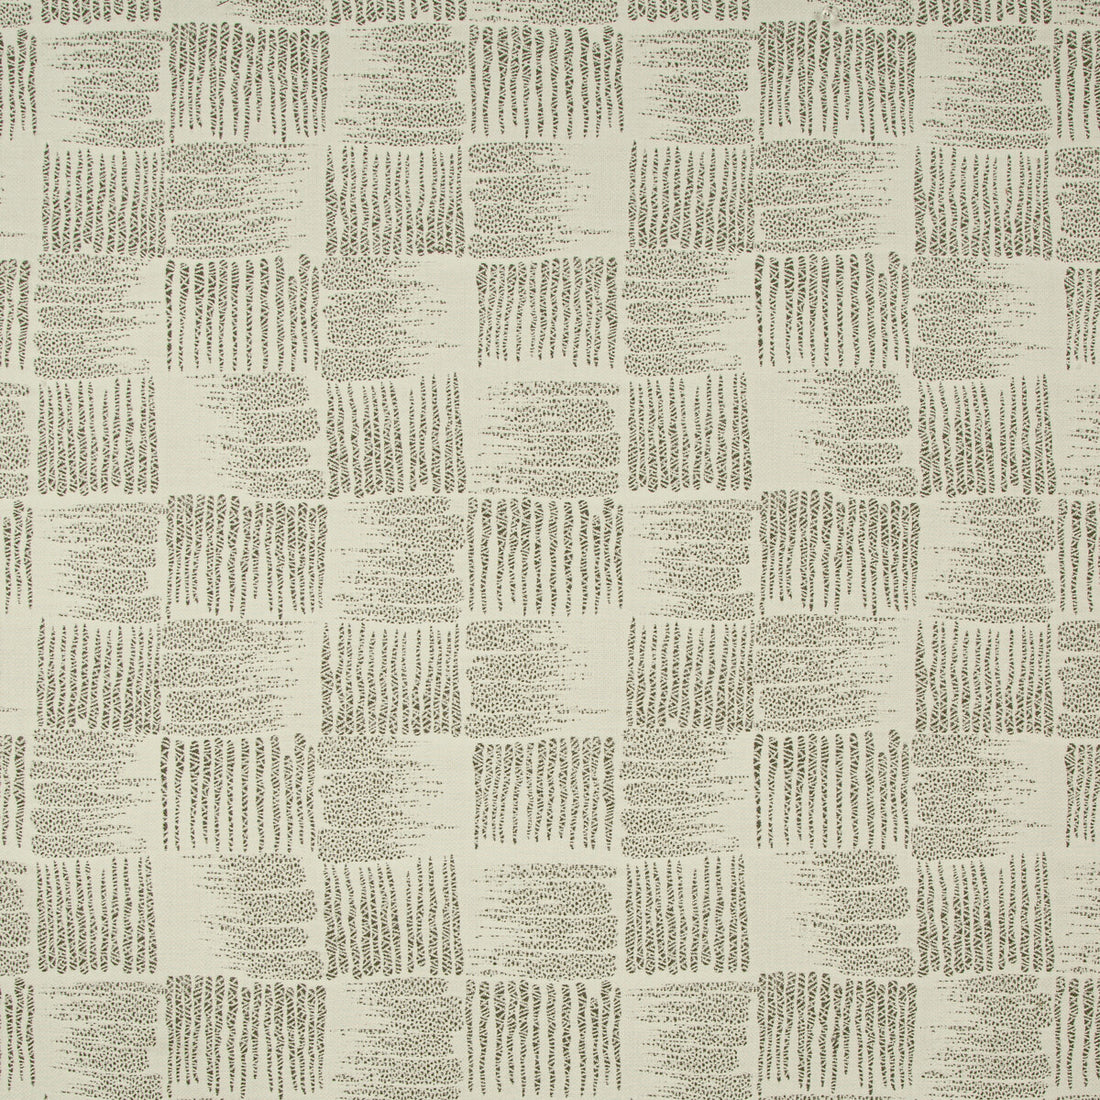 Lj Grw fabric - pattern 2019141.11.0 - by Lee Jofa Modern in the Kw Terra Firma III Indoor Outdoor collection